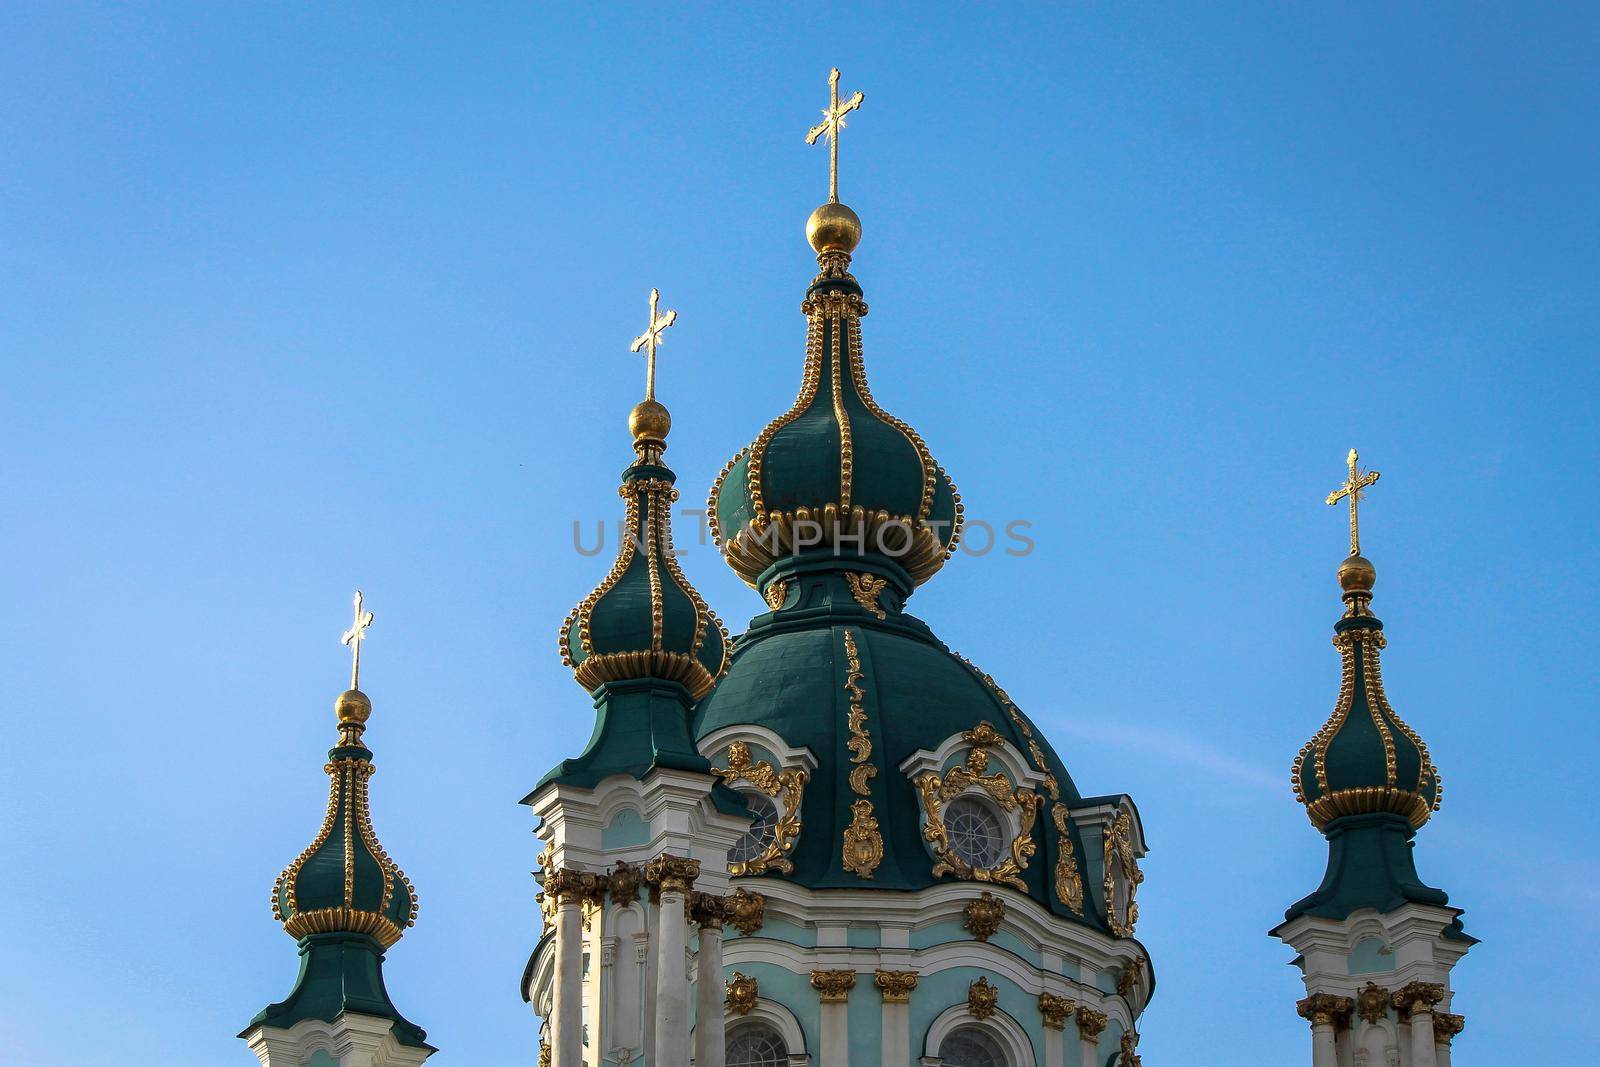 Green domes of the Kiev-Pechersk Lavra church against the blue sky by grekoni